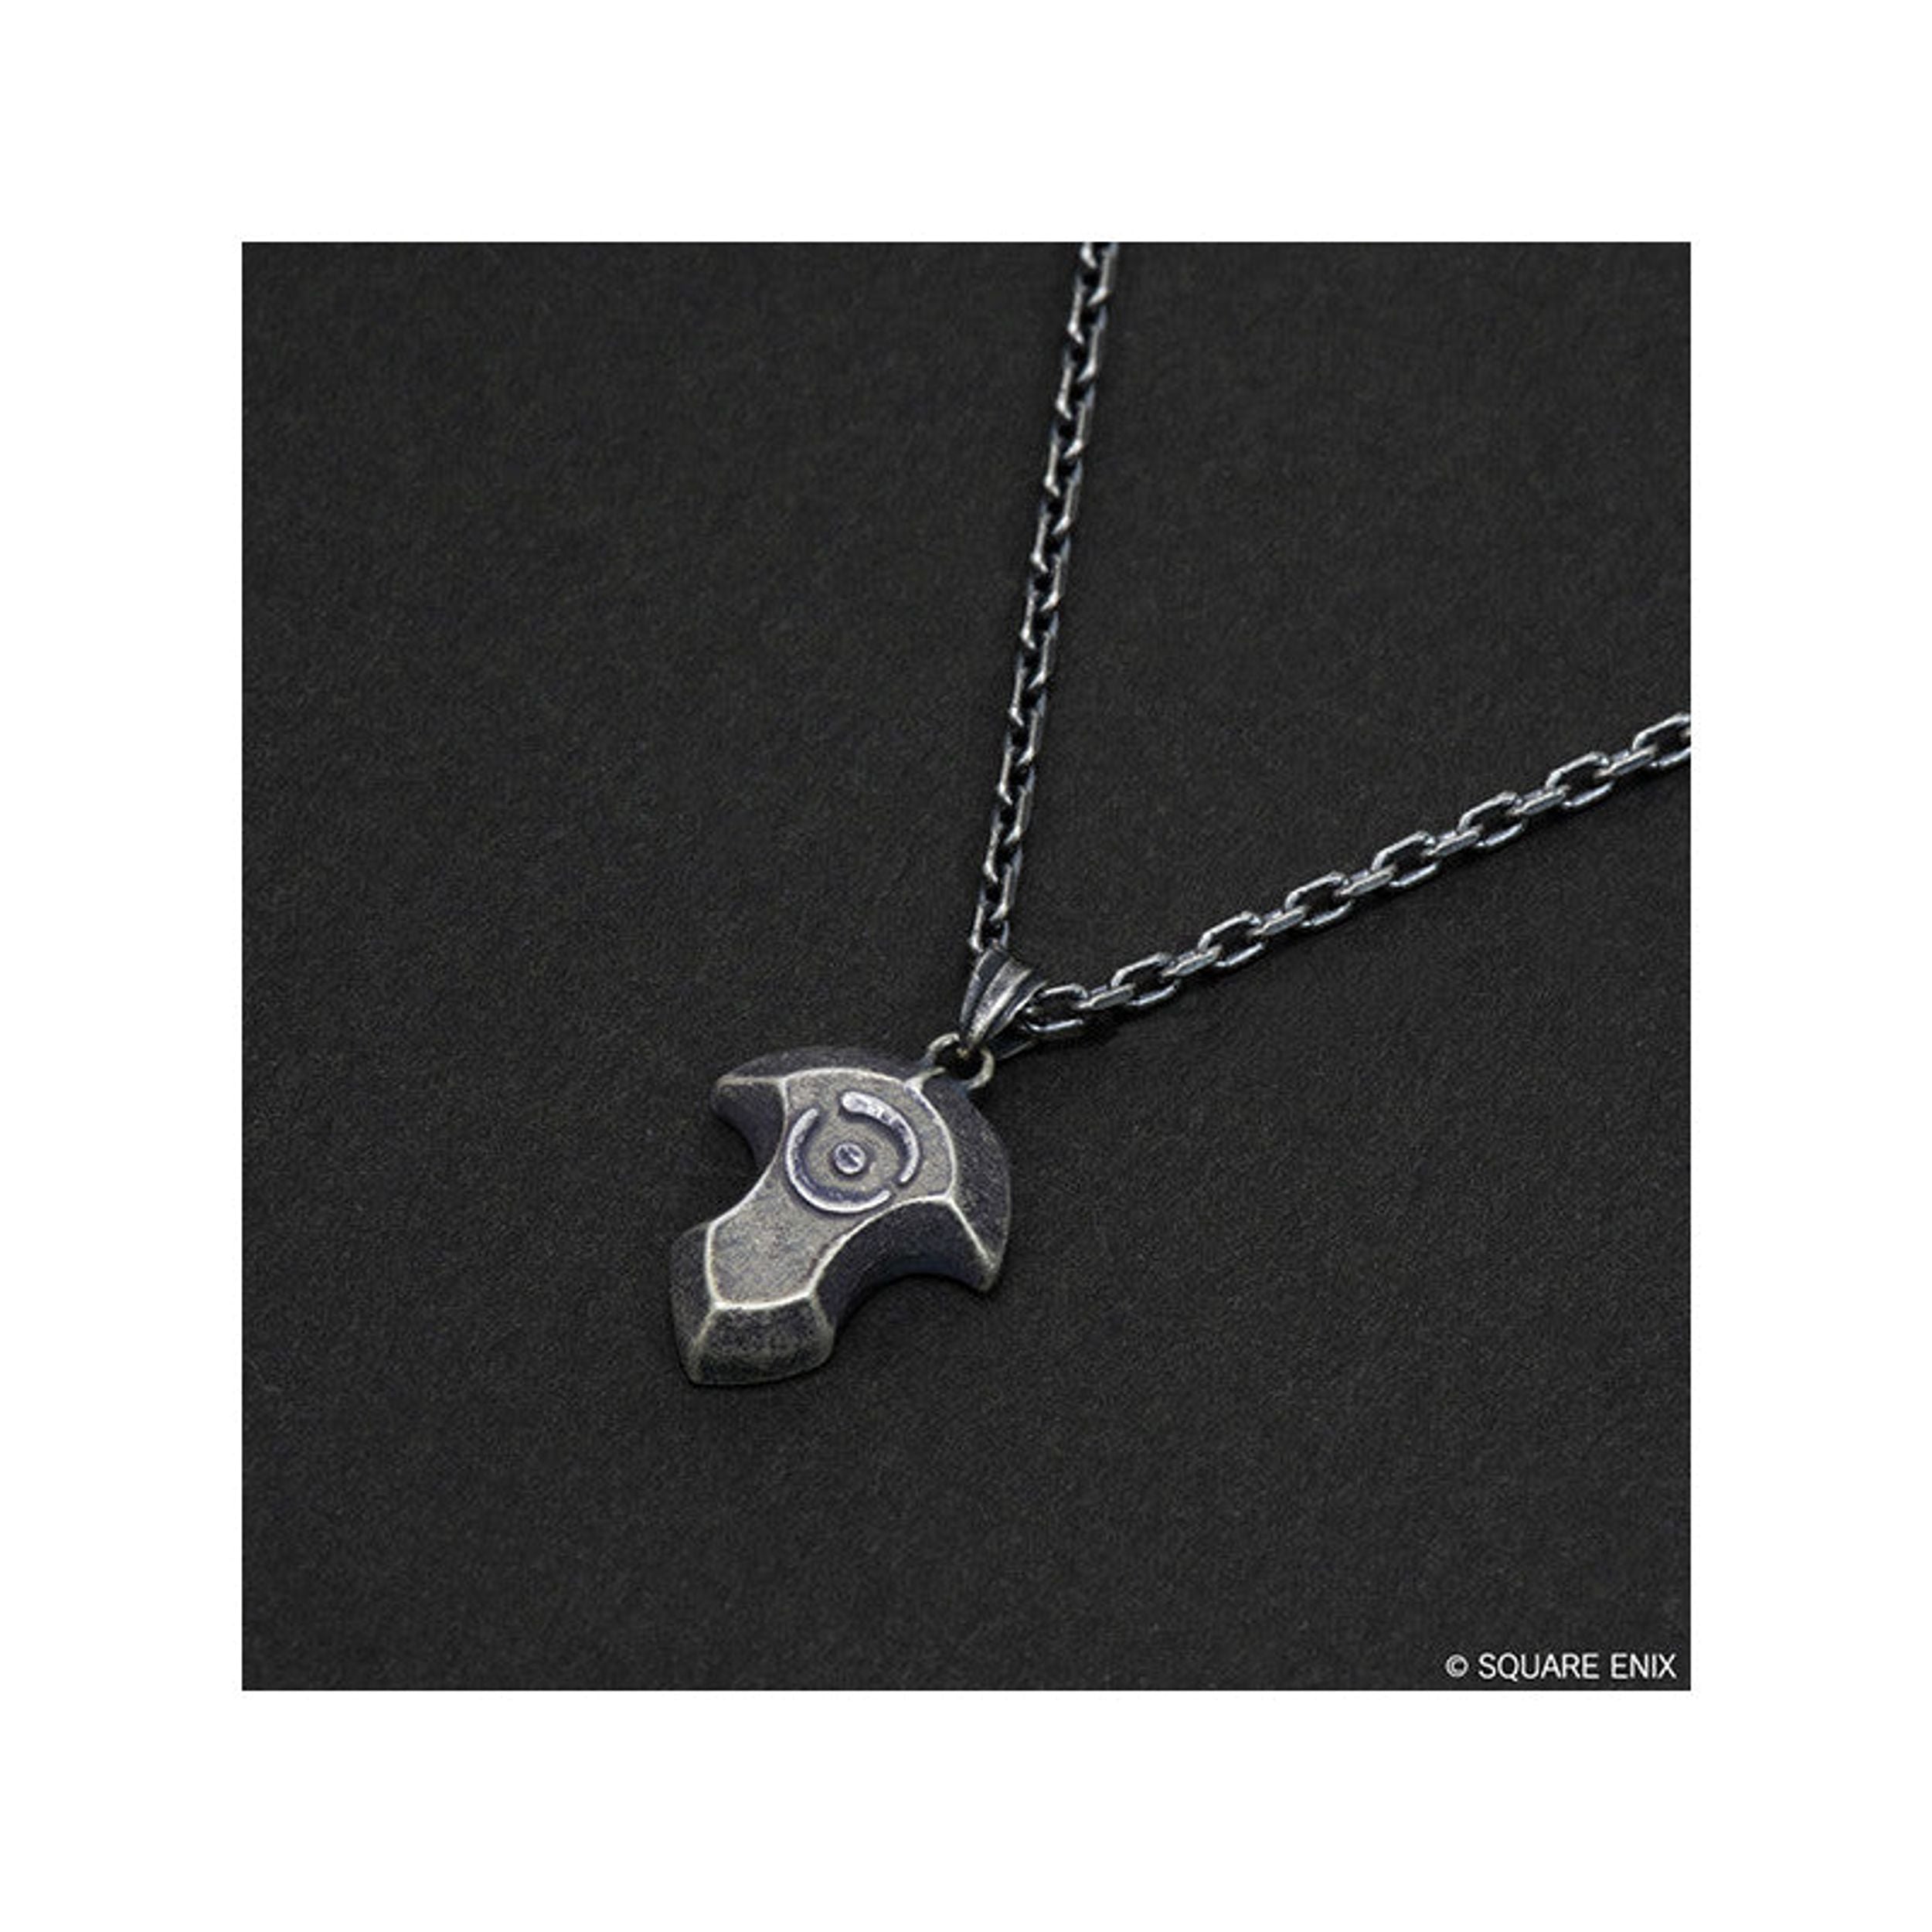 Necklace Azem's Crystal Silver Pendant Final Fantasy XIV